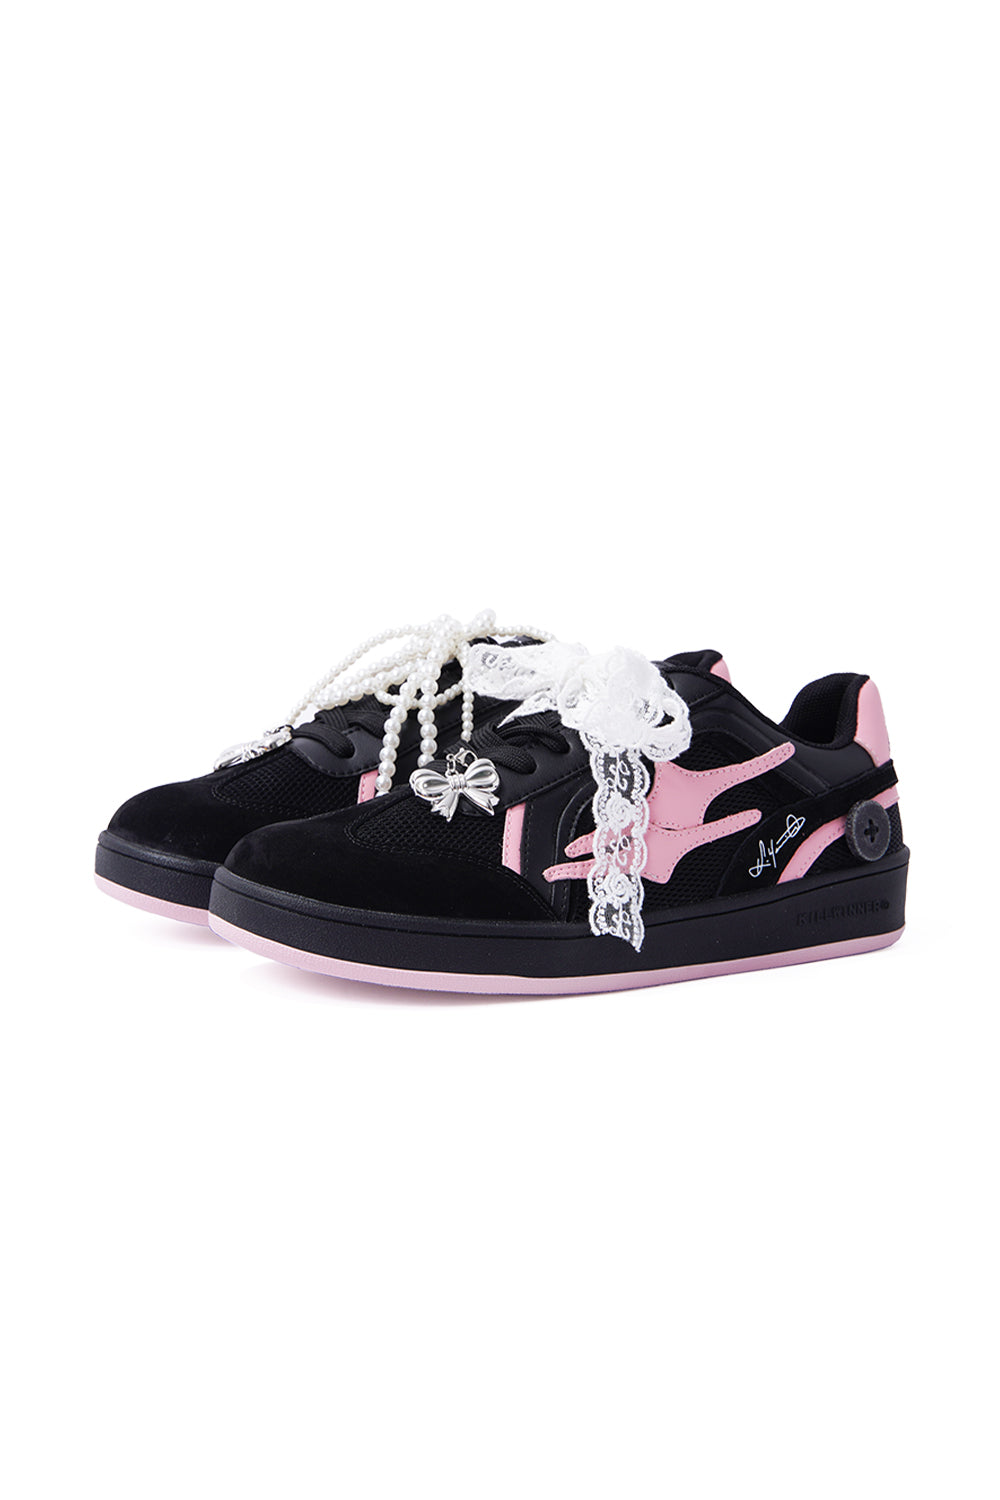 Retro Training Sneaker-Black Pink Bow